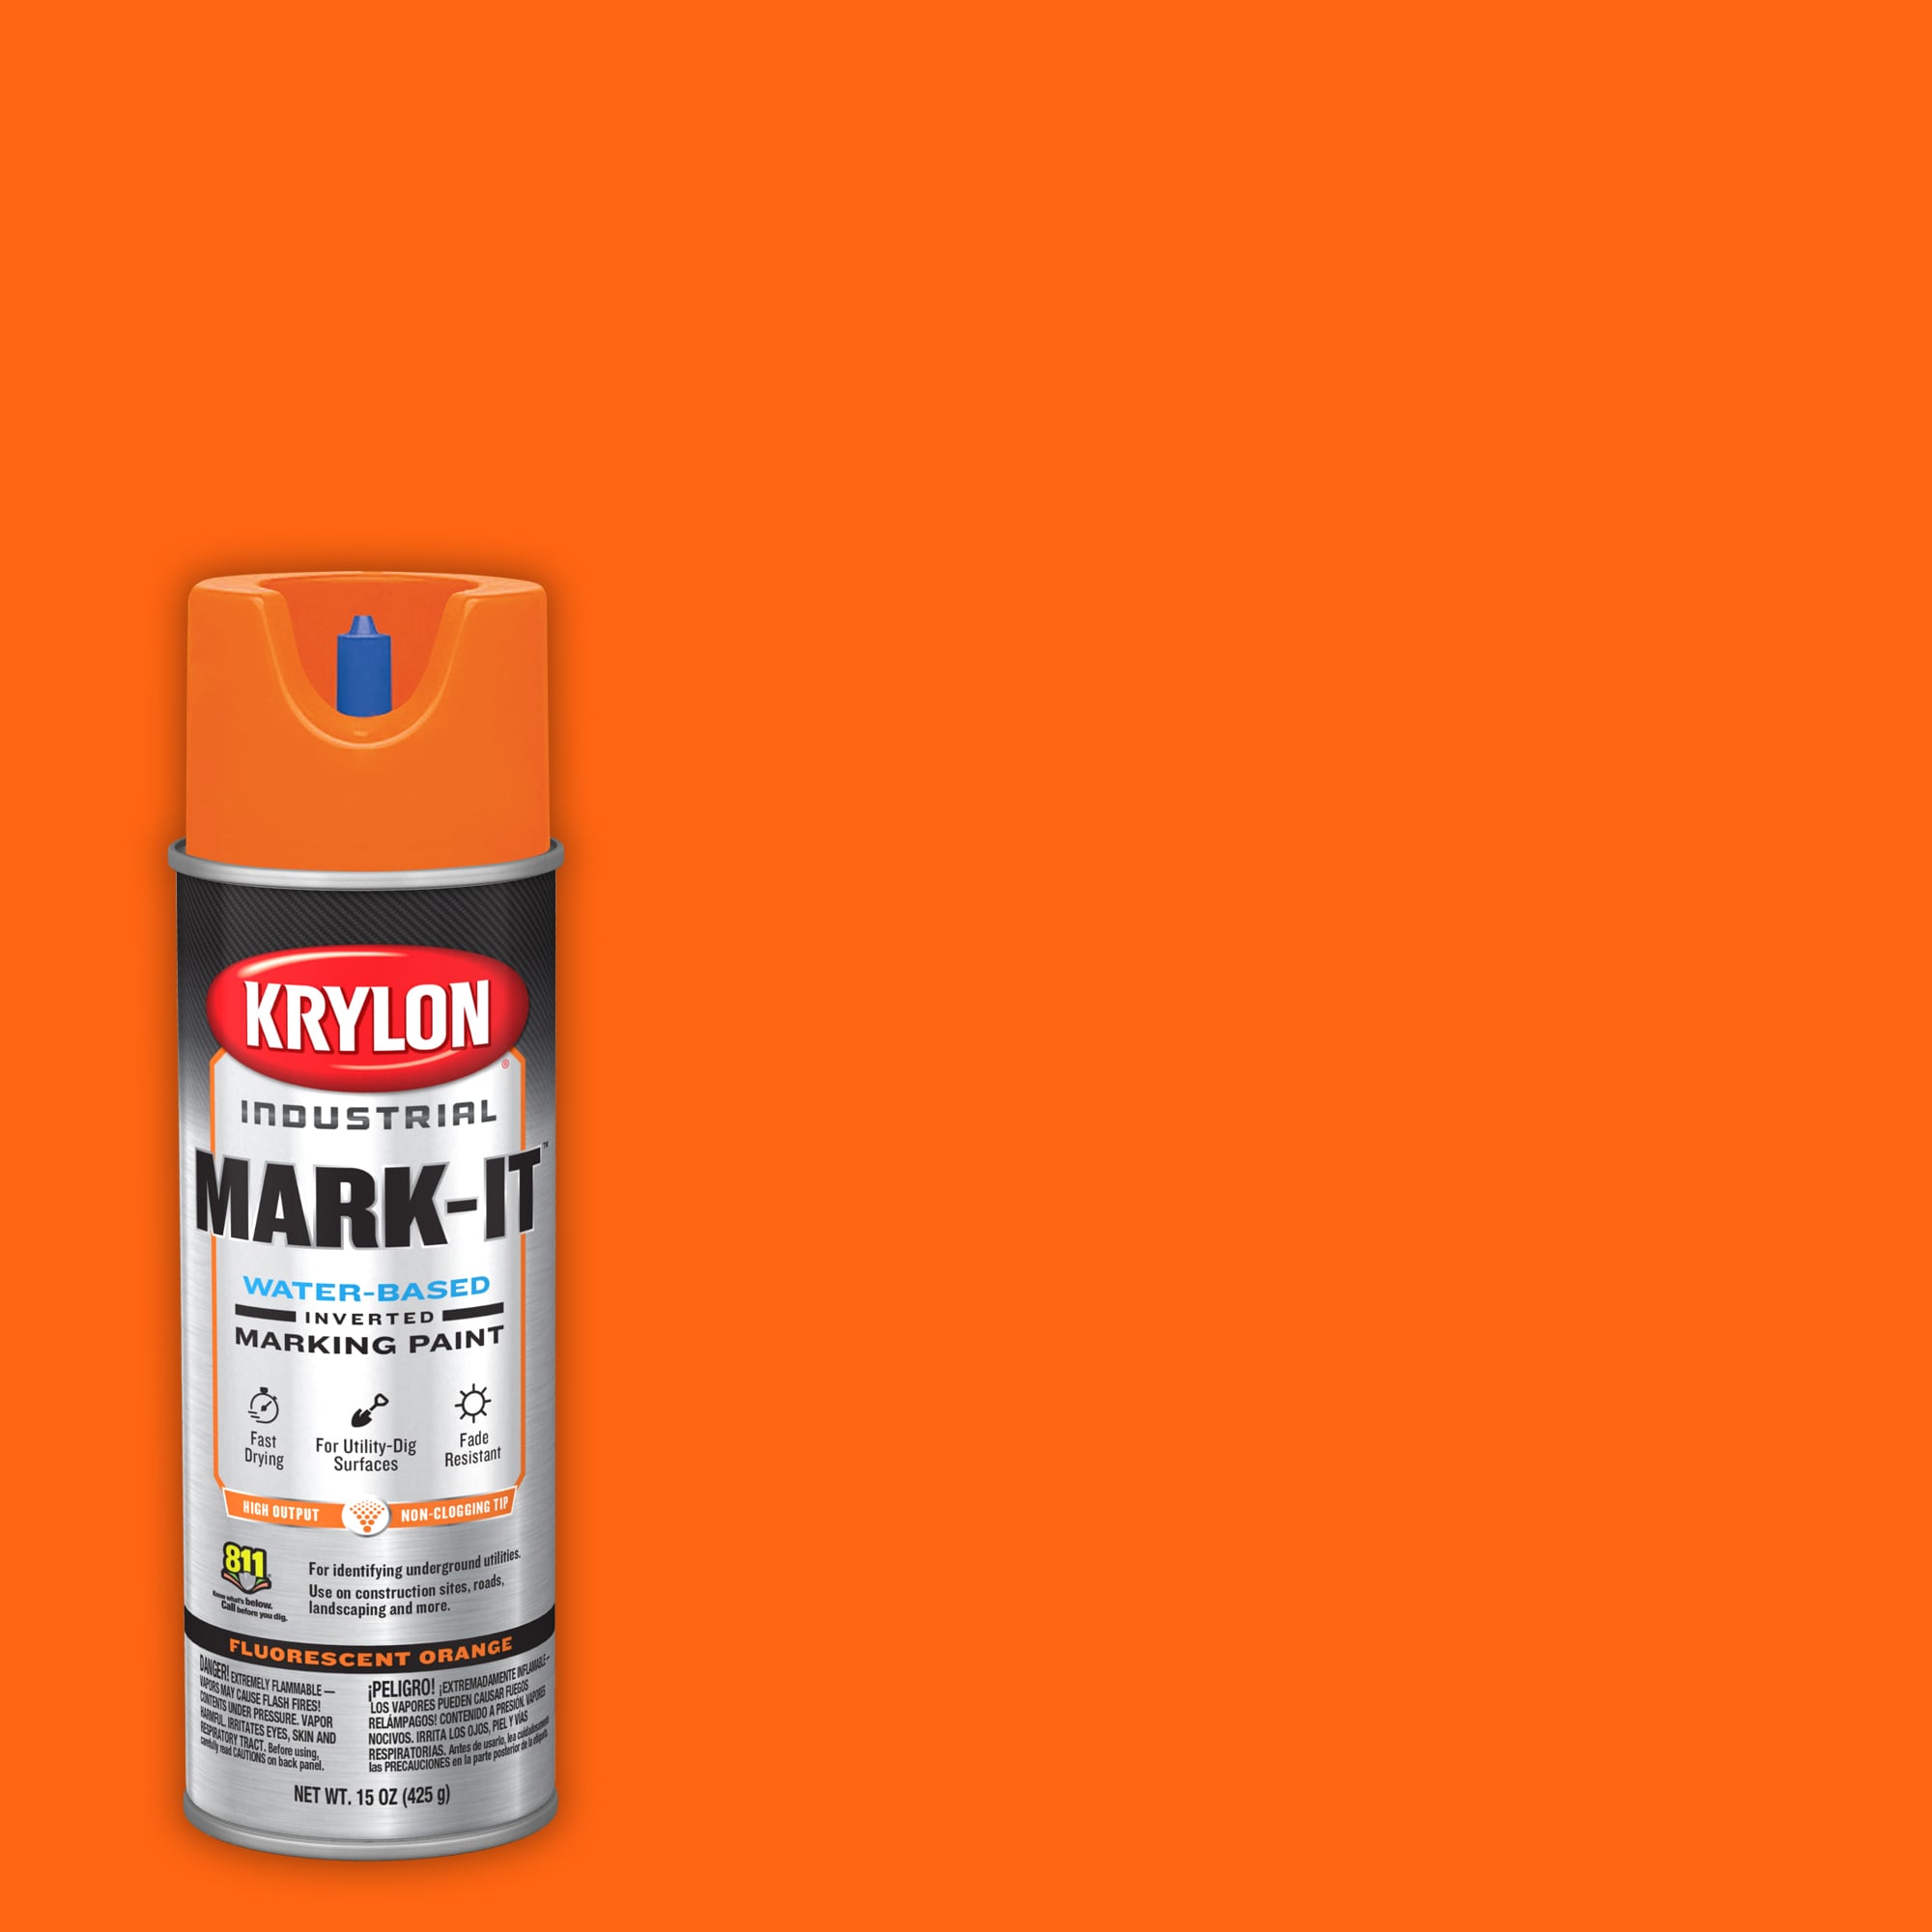 Spray Adhesive: 24 oz Aerosol Can, Orange